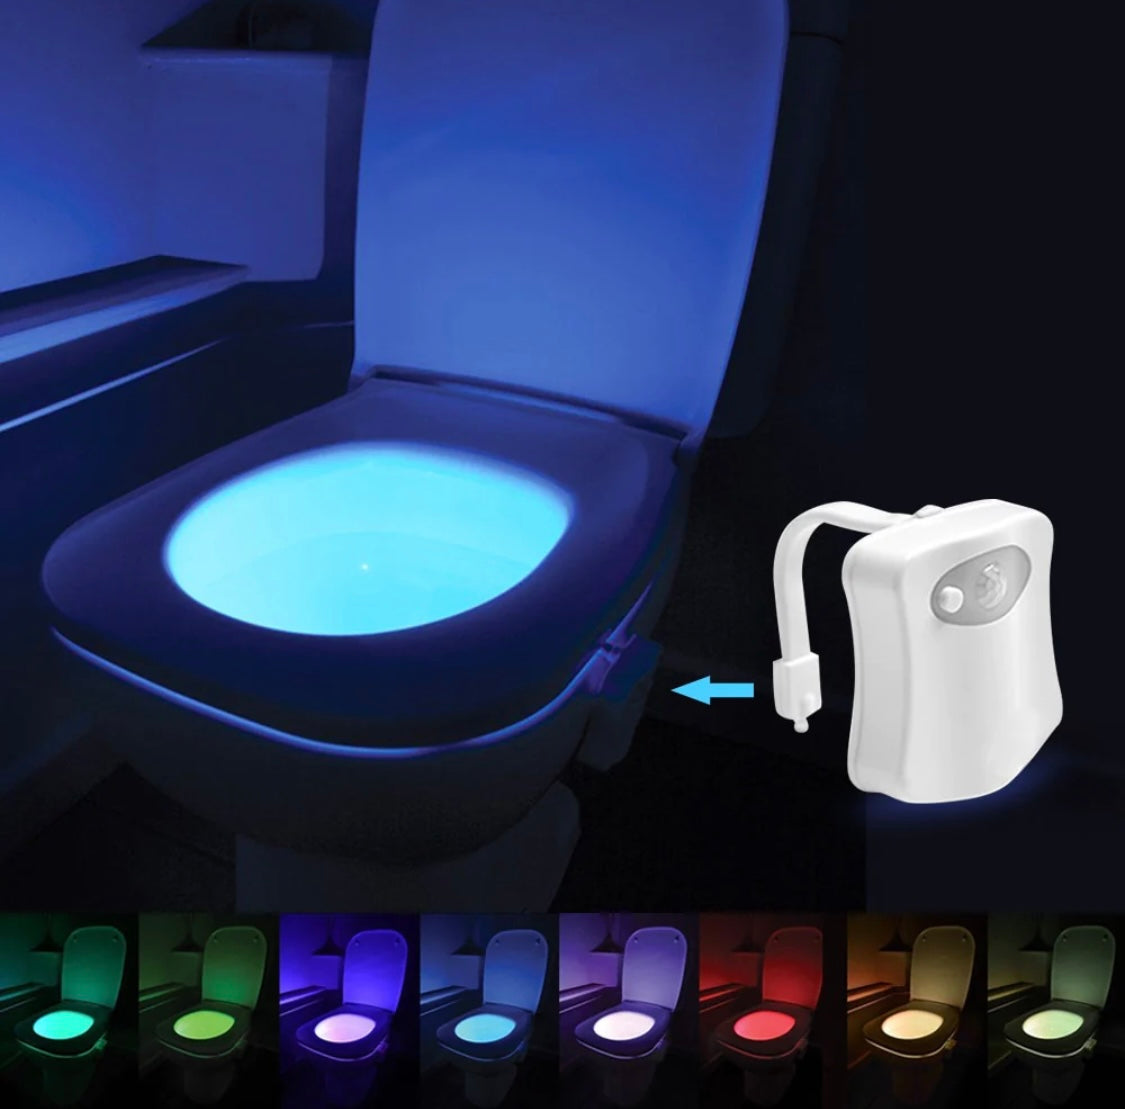 LED light. Toilet bowl